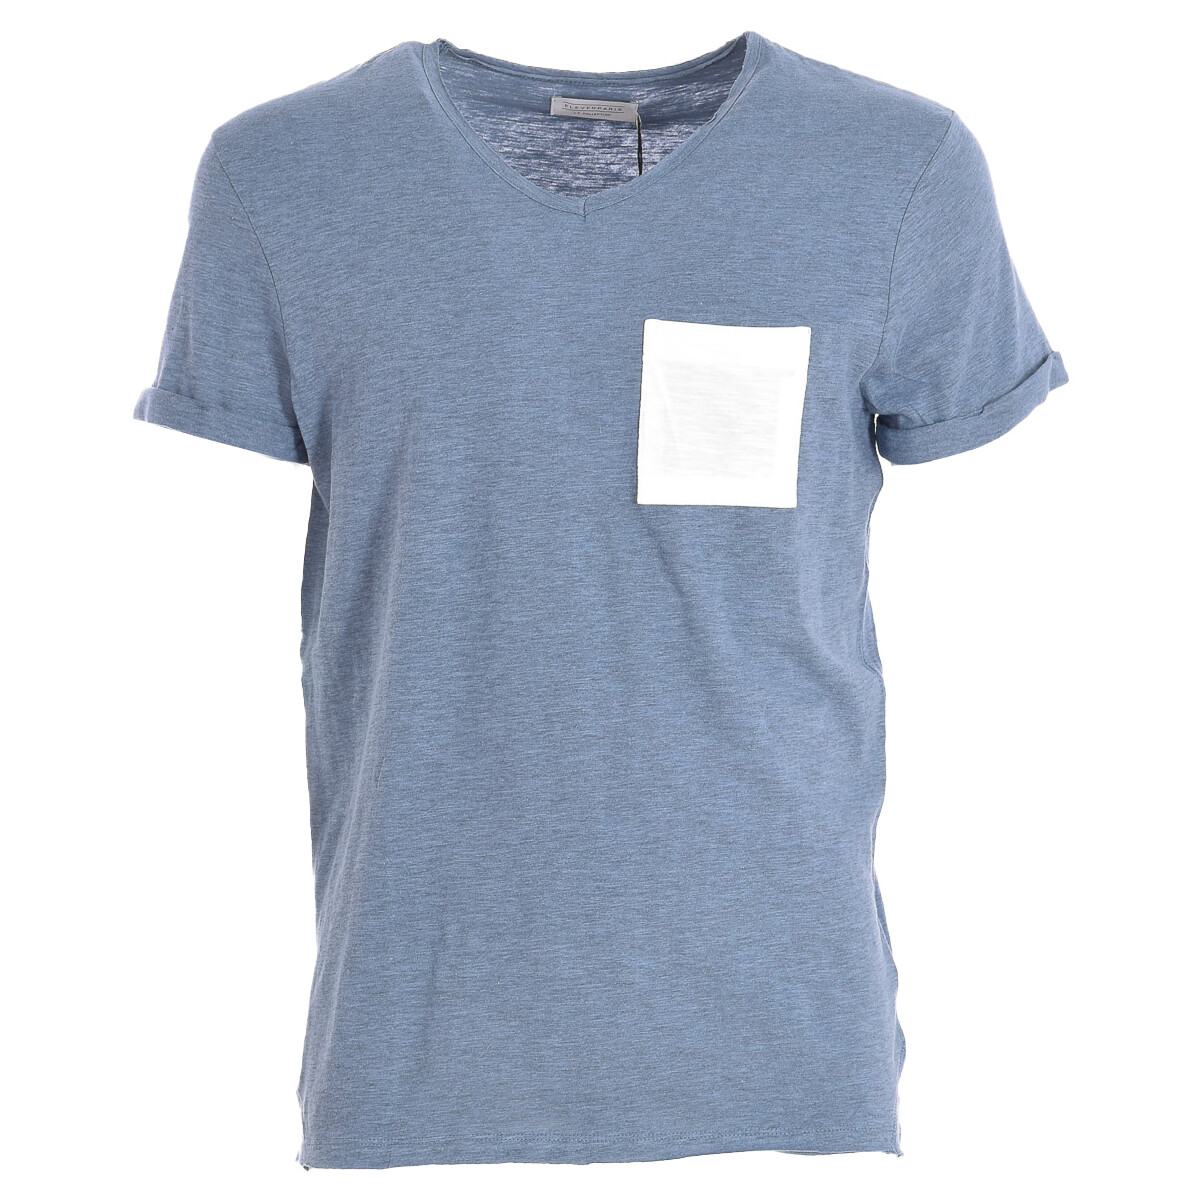 textil Dam Långärmade T-shirts Eleven Paris 17S1TS26-M0712 Blå